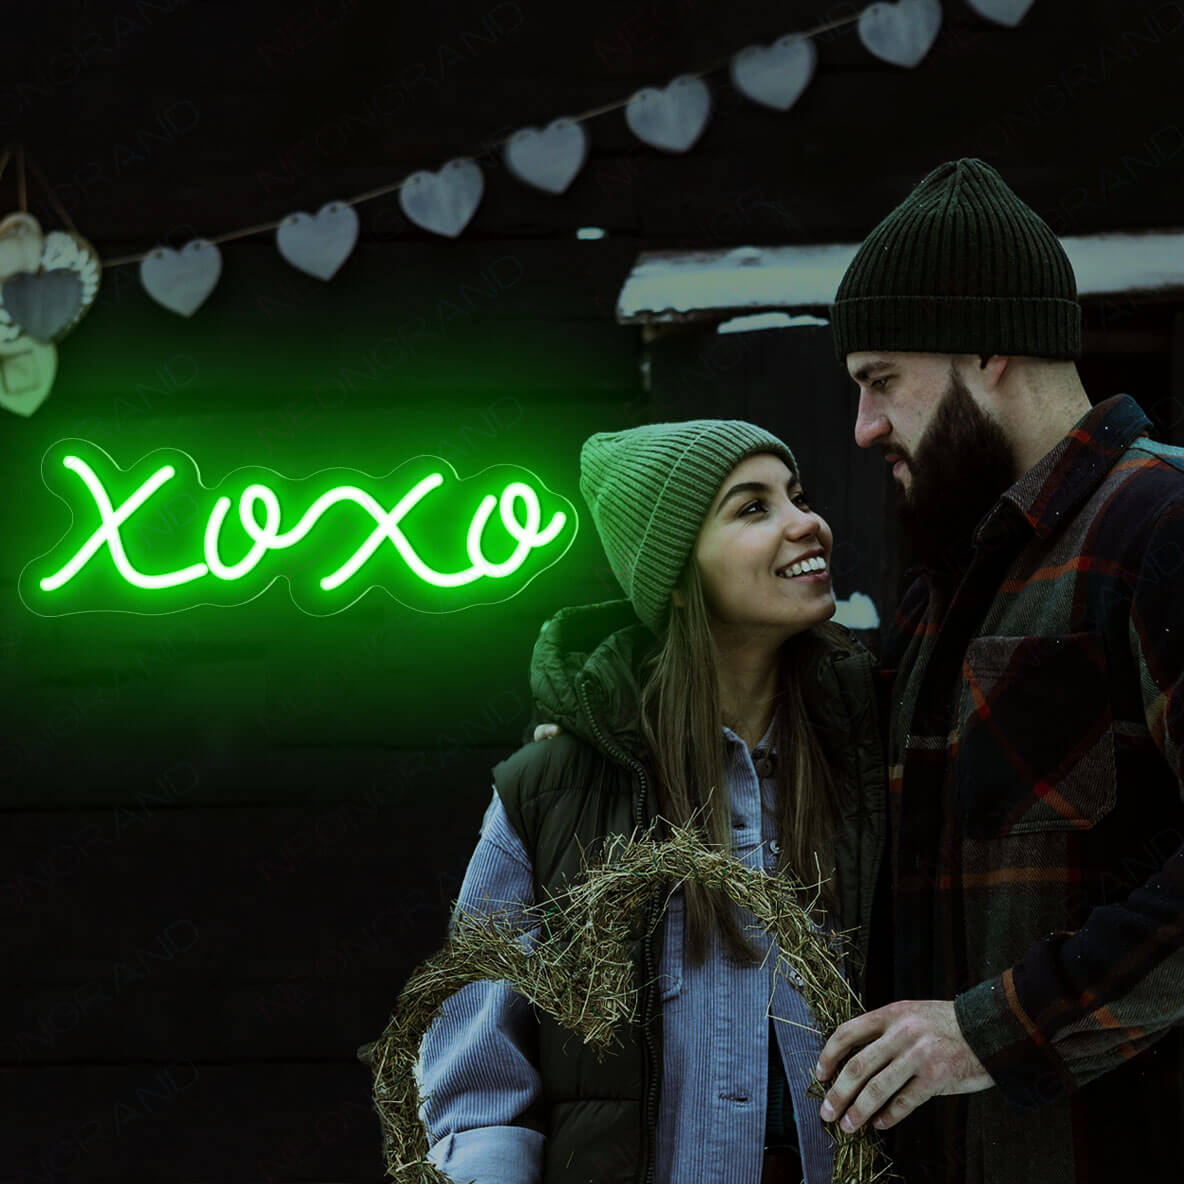 XOXO Neon Sign Hugs And Kisses Love Led Light green wm